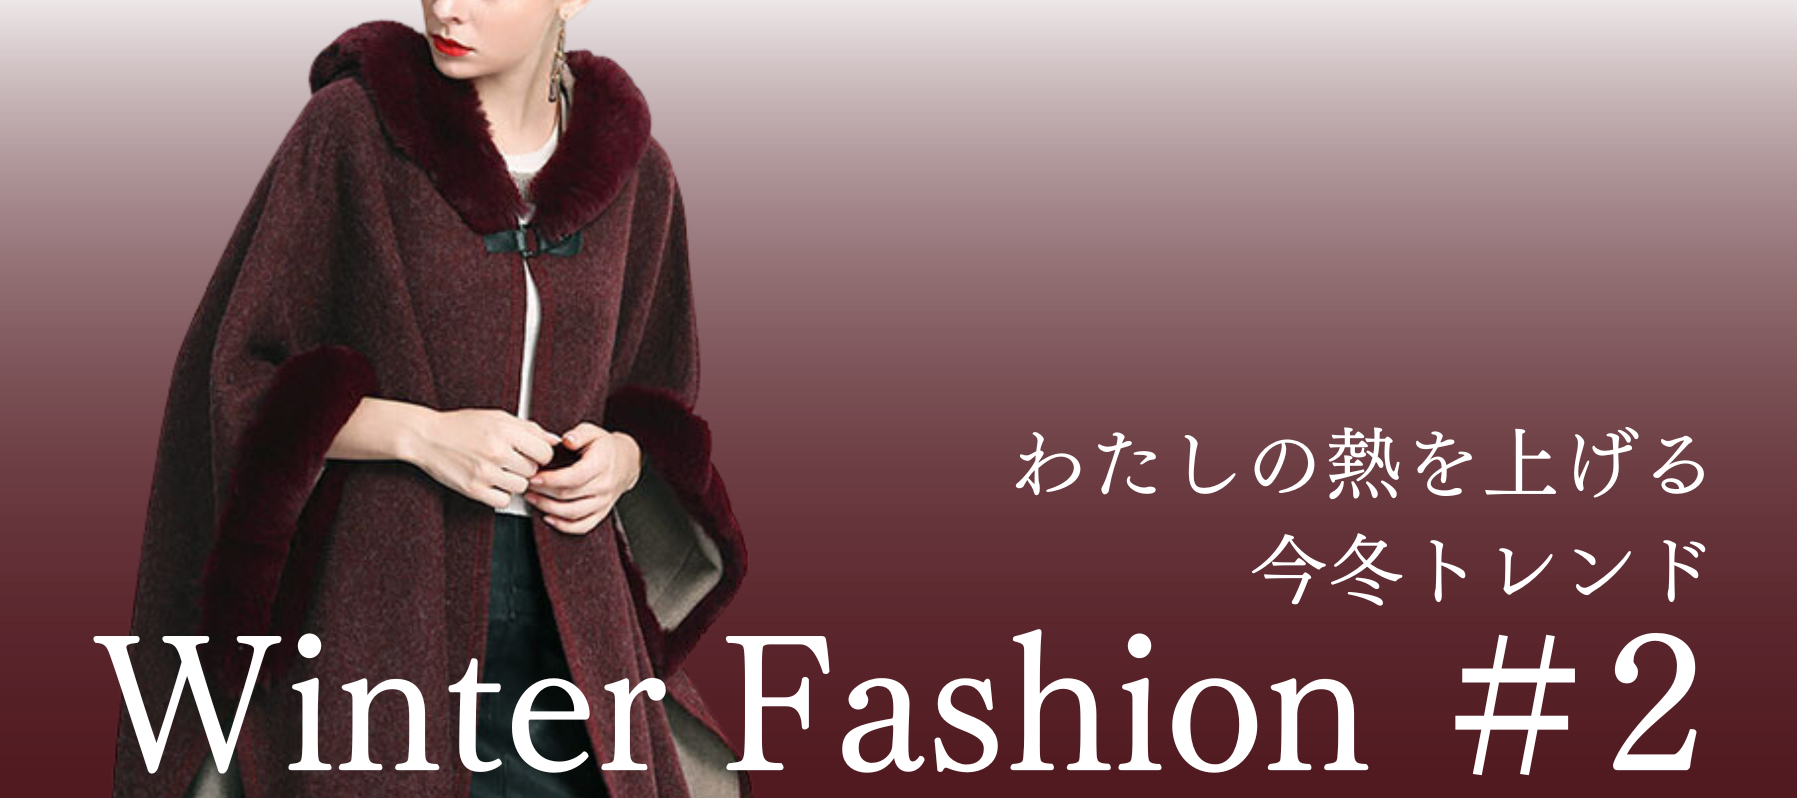 Winter Fashion #2